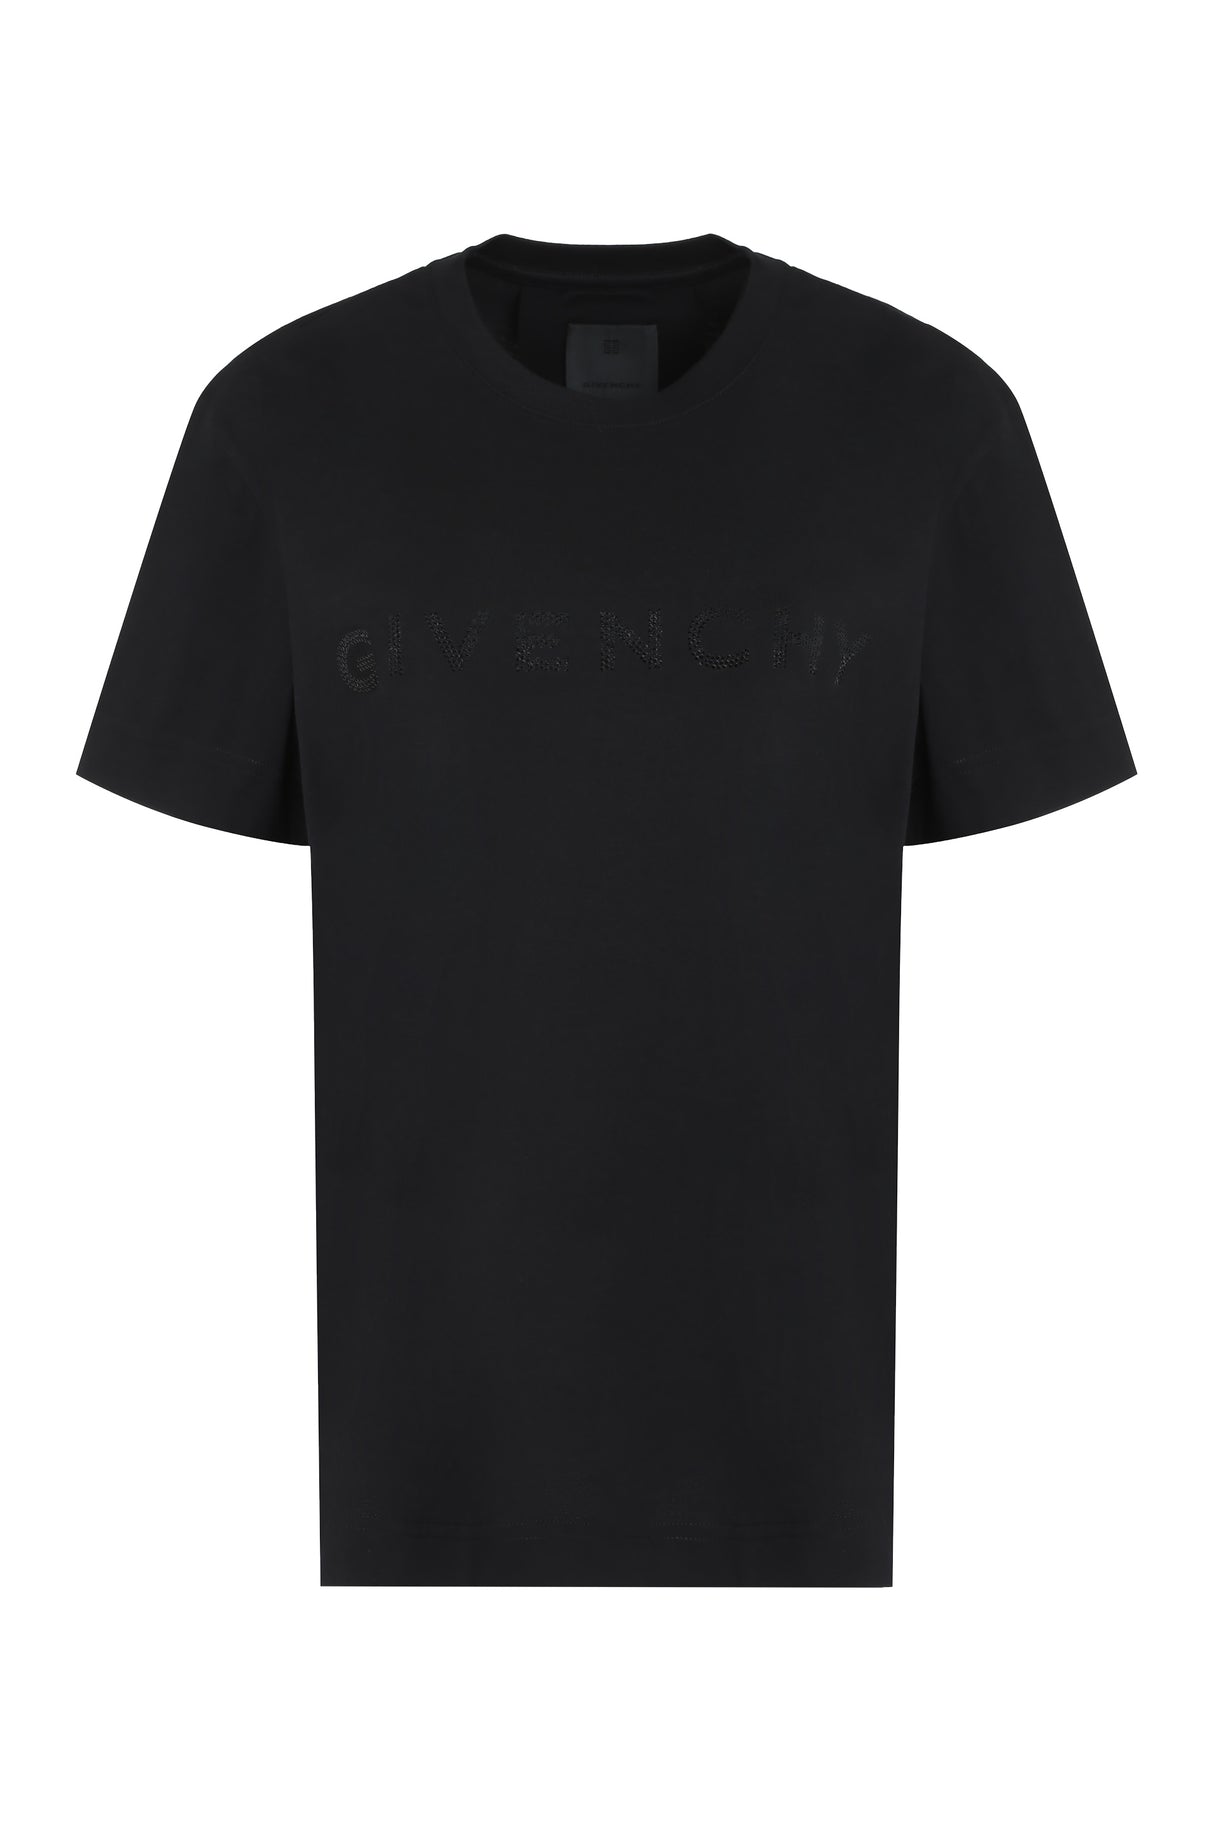 Rhinestonesロゴ シリーズFW23 コレクション 100% コットン Tシャツ